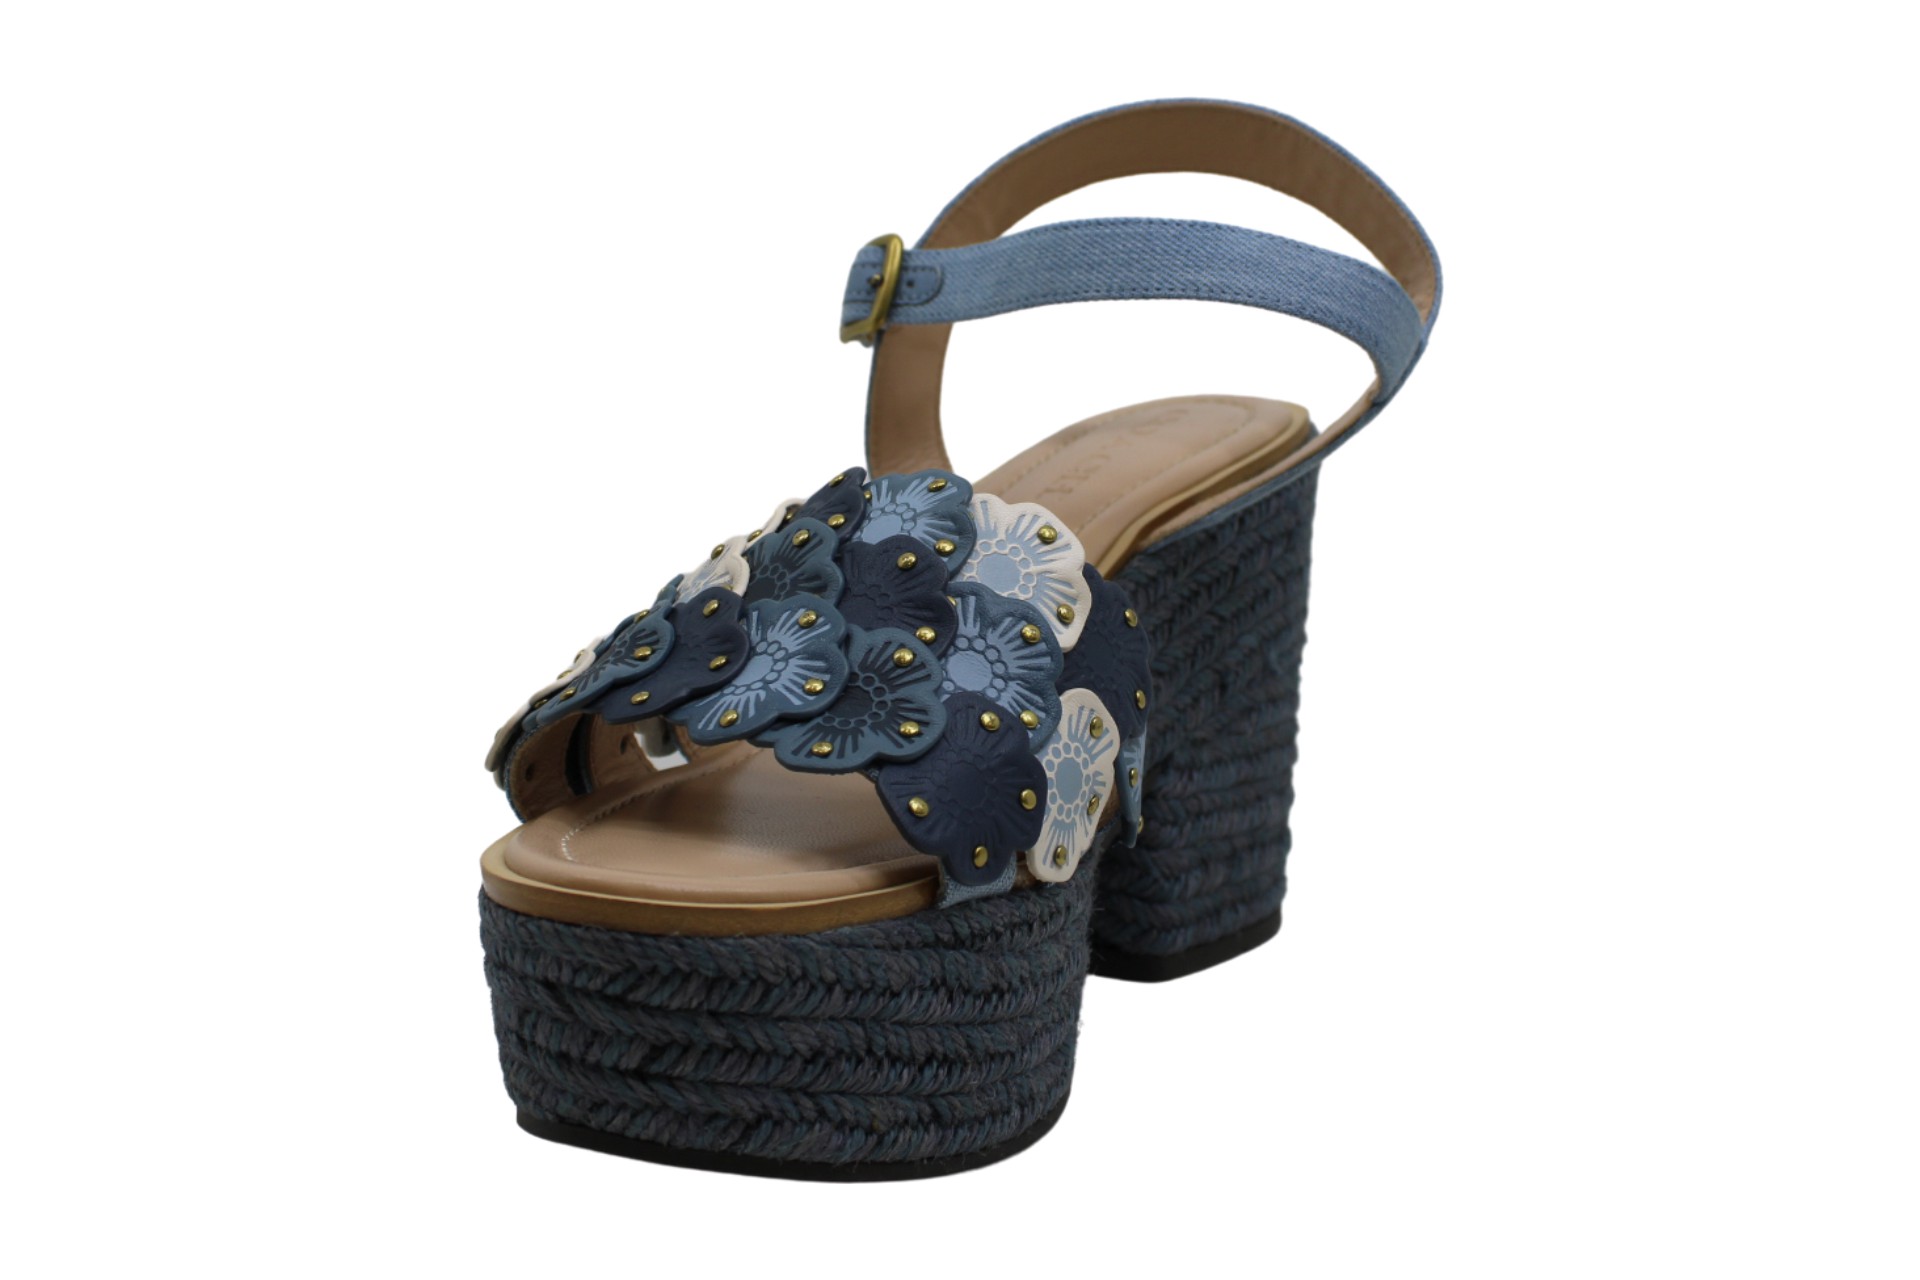 Coach Womens Platform Sandals in Blue Color, Size 10 FWE | eBay